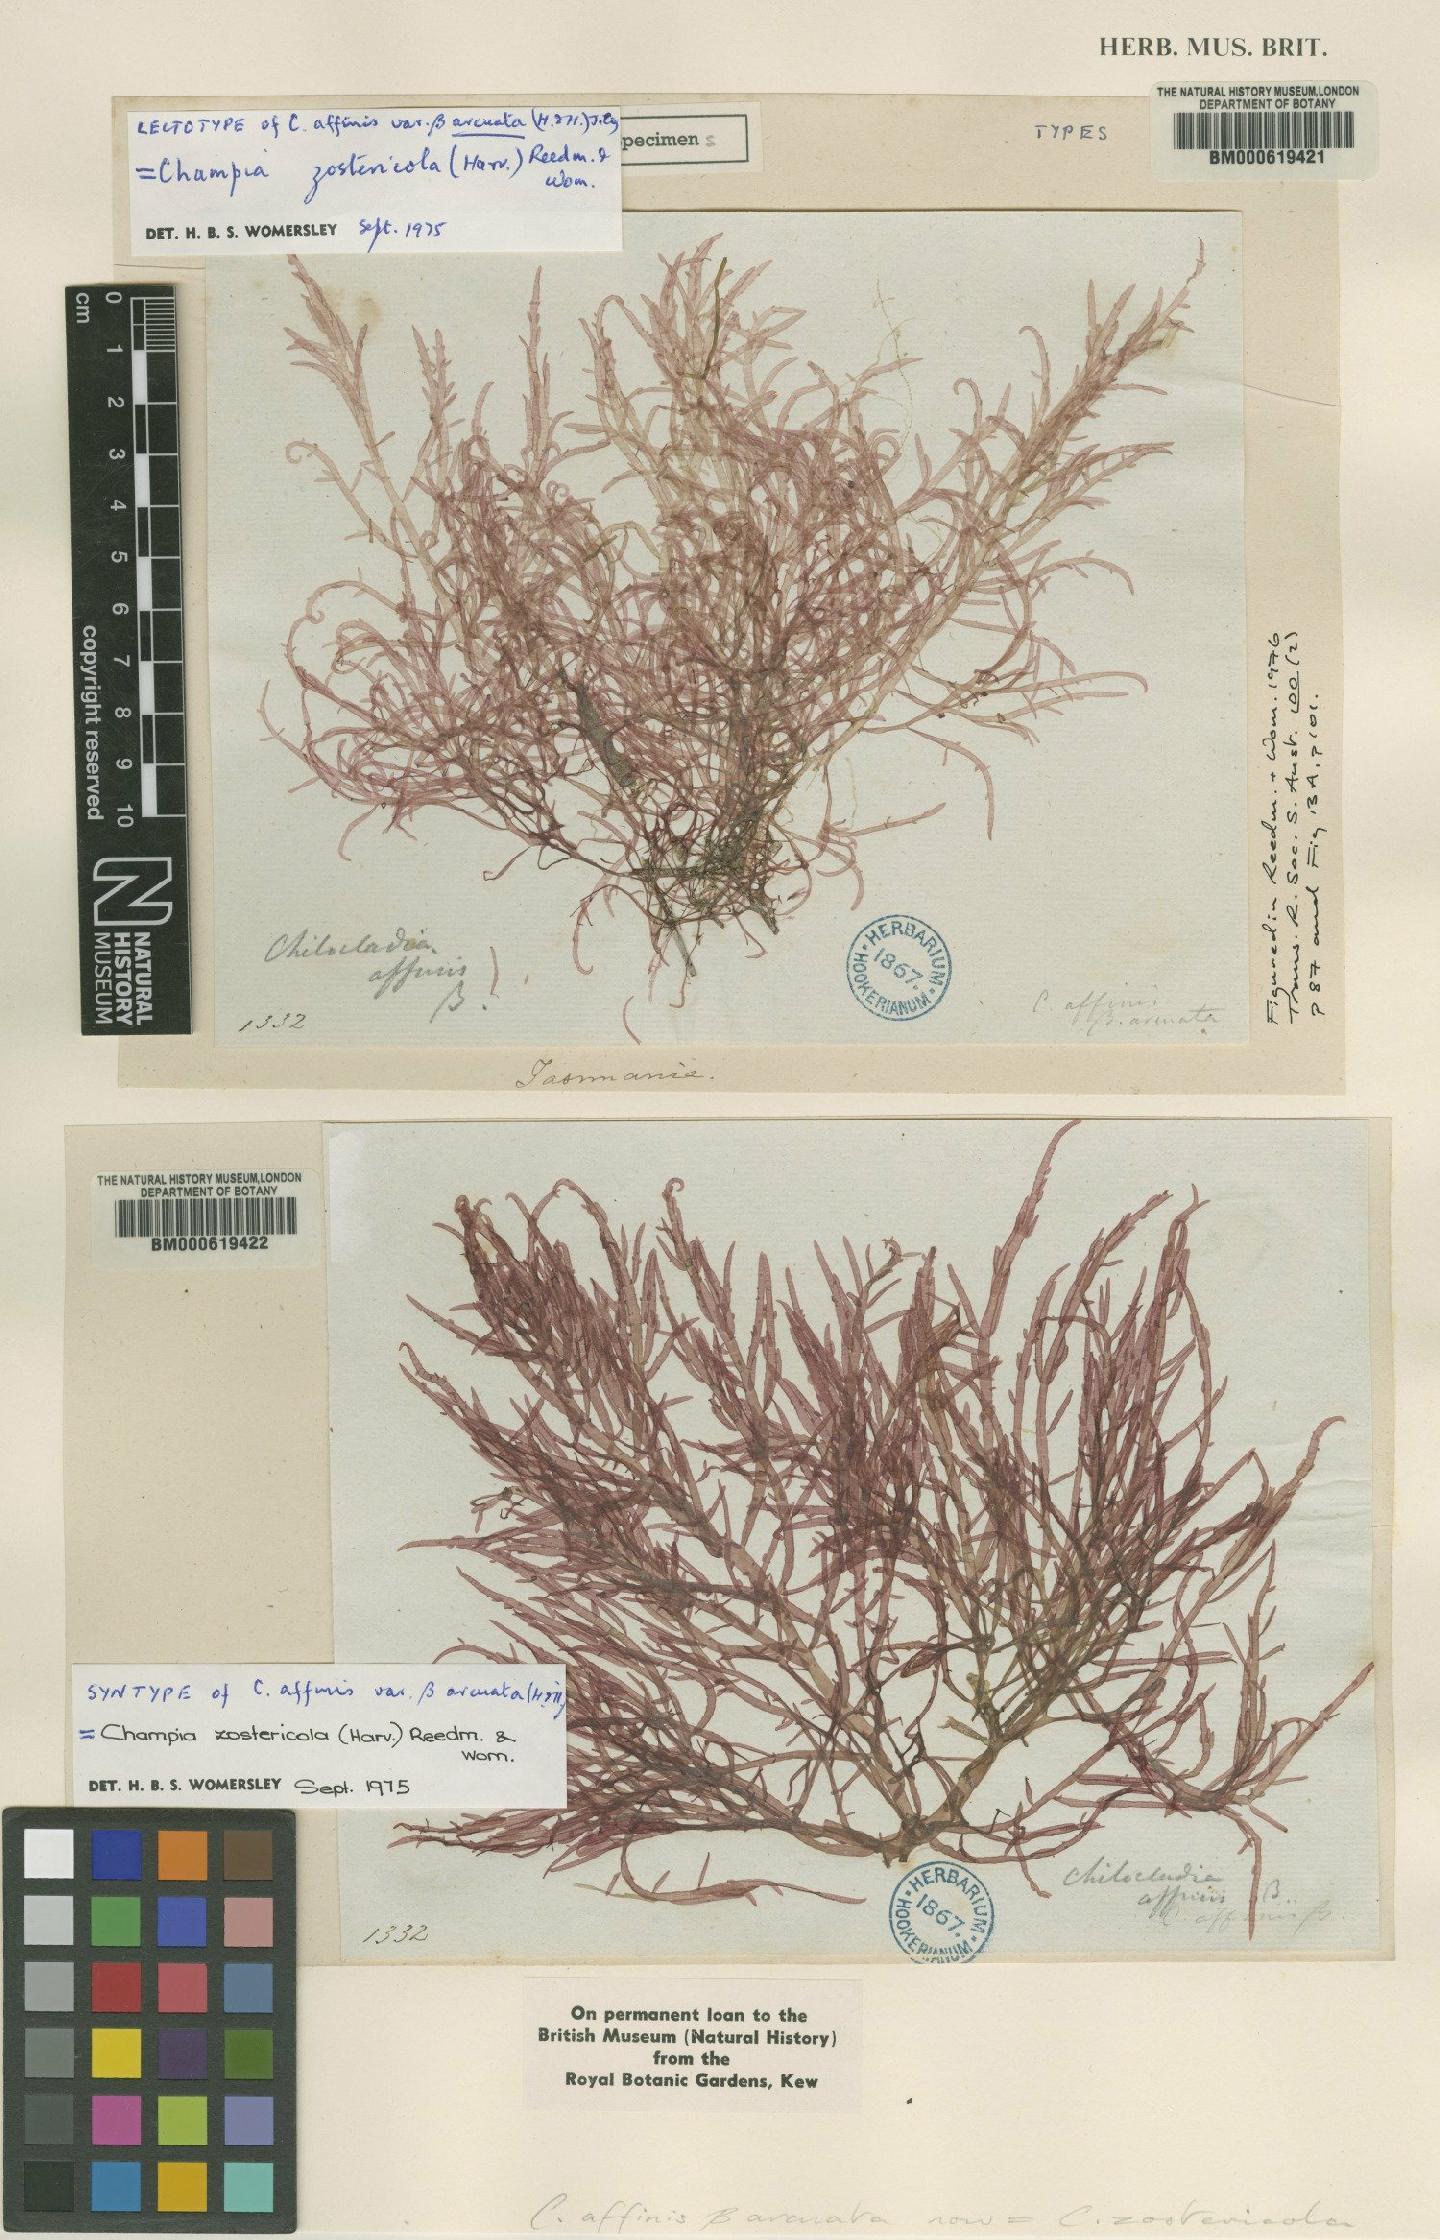 To NHMUK collection (Champia zostericola (Harv.) Reedman & Womersley; LECTOTYPE; NHMUK:ecatalogue:4790033)